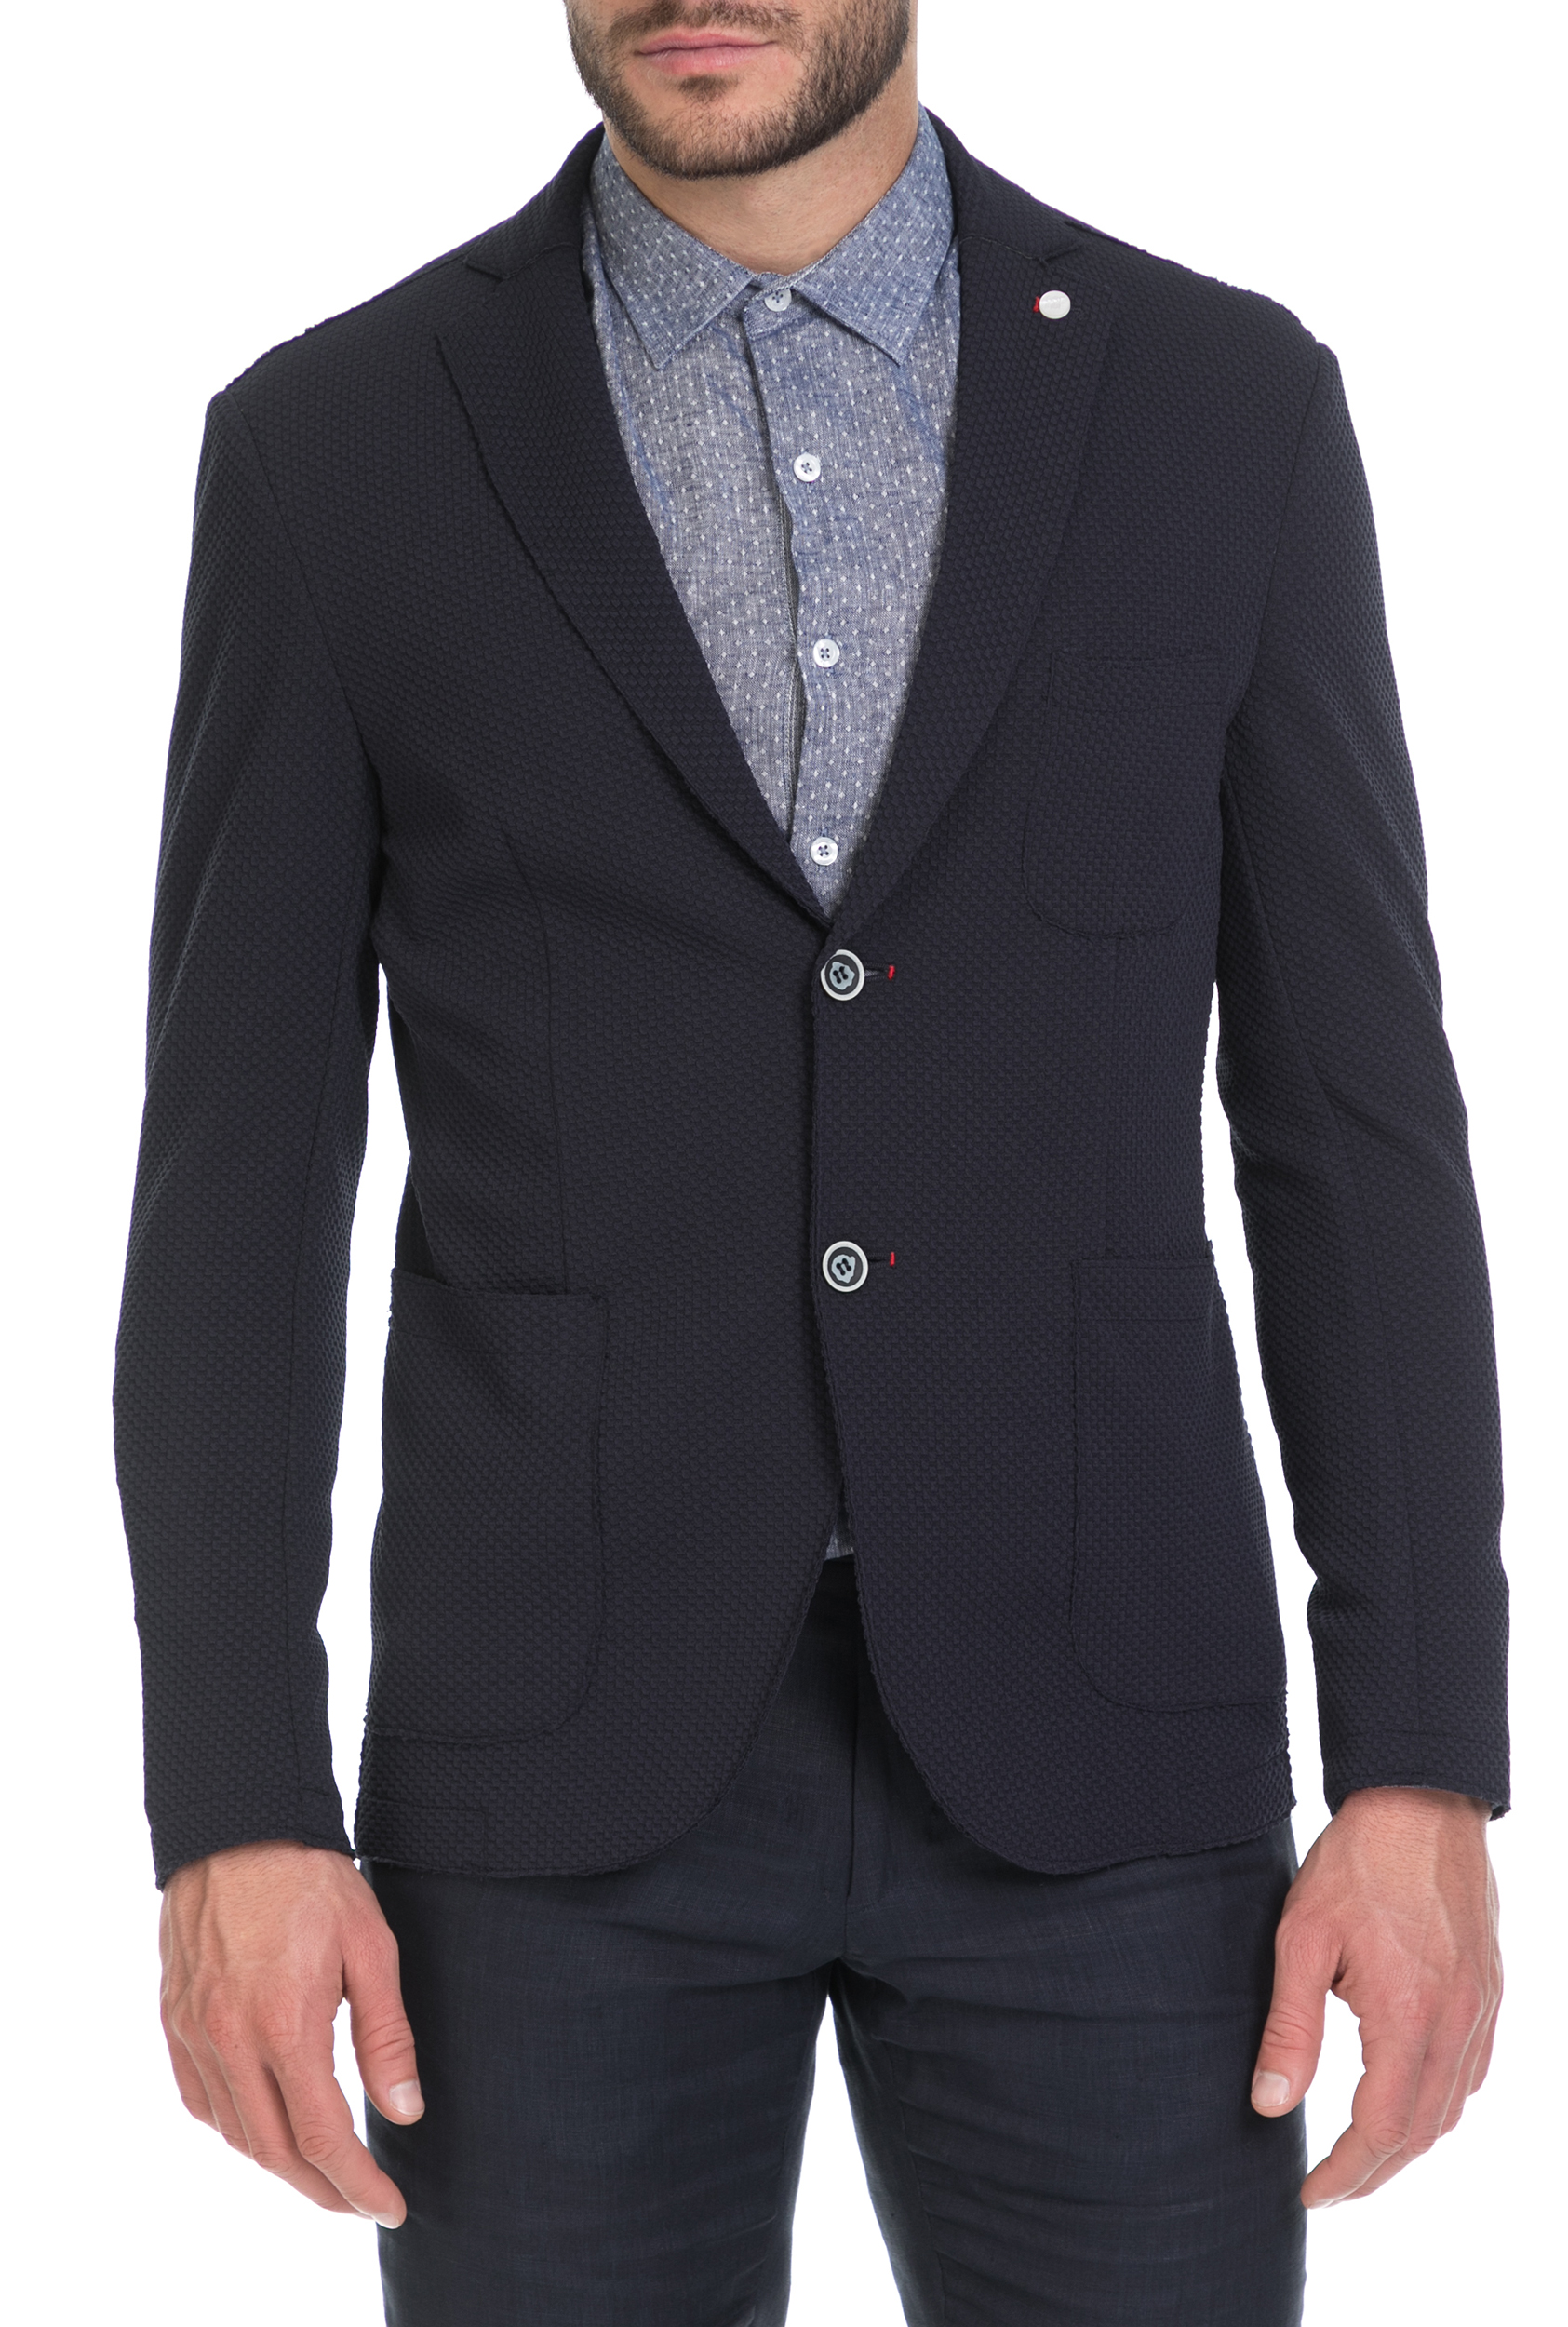 SSEINSE - Ανδρικό σακάκι SSEINSE μπλε Ανδρικά/Ρούχα/Πανωφόρια/Σακάκια